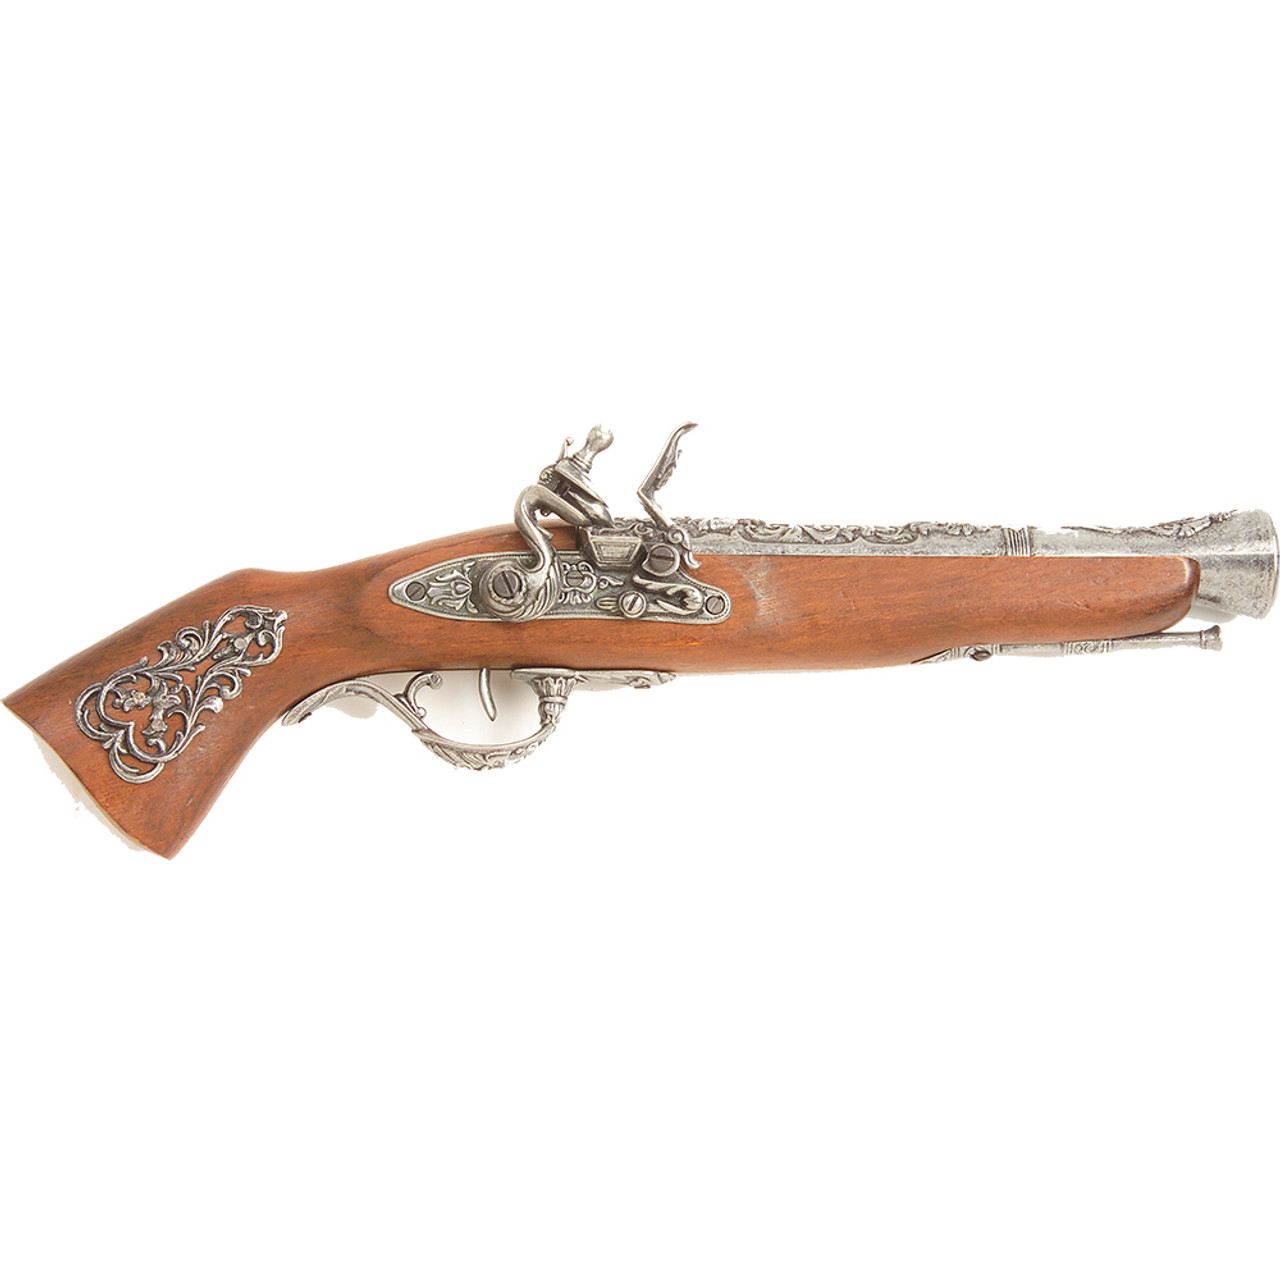 French Blunderbuss Pistol, Espingole, 18th Century, Replica This re